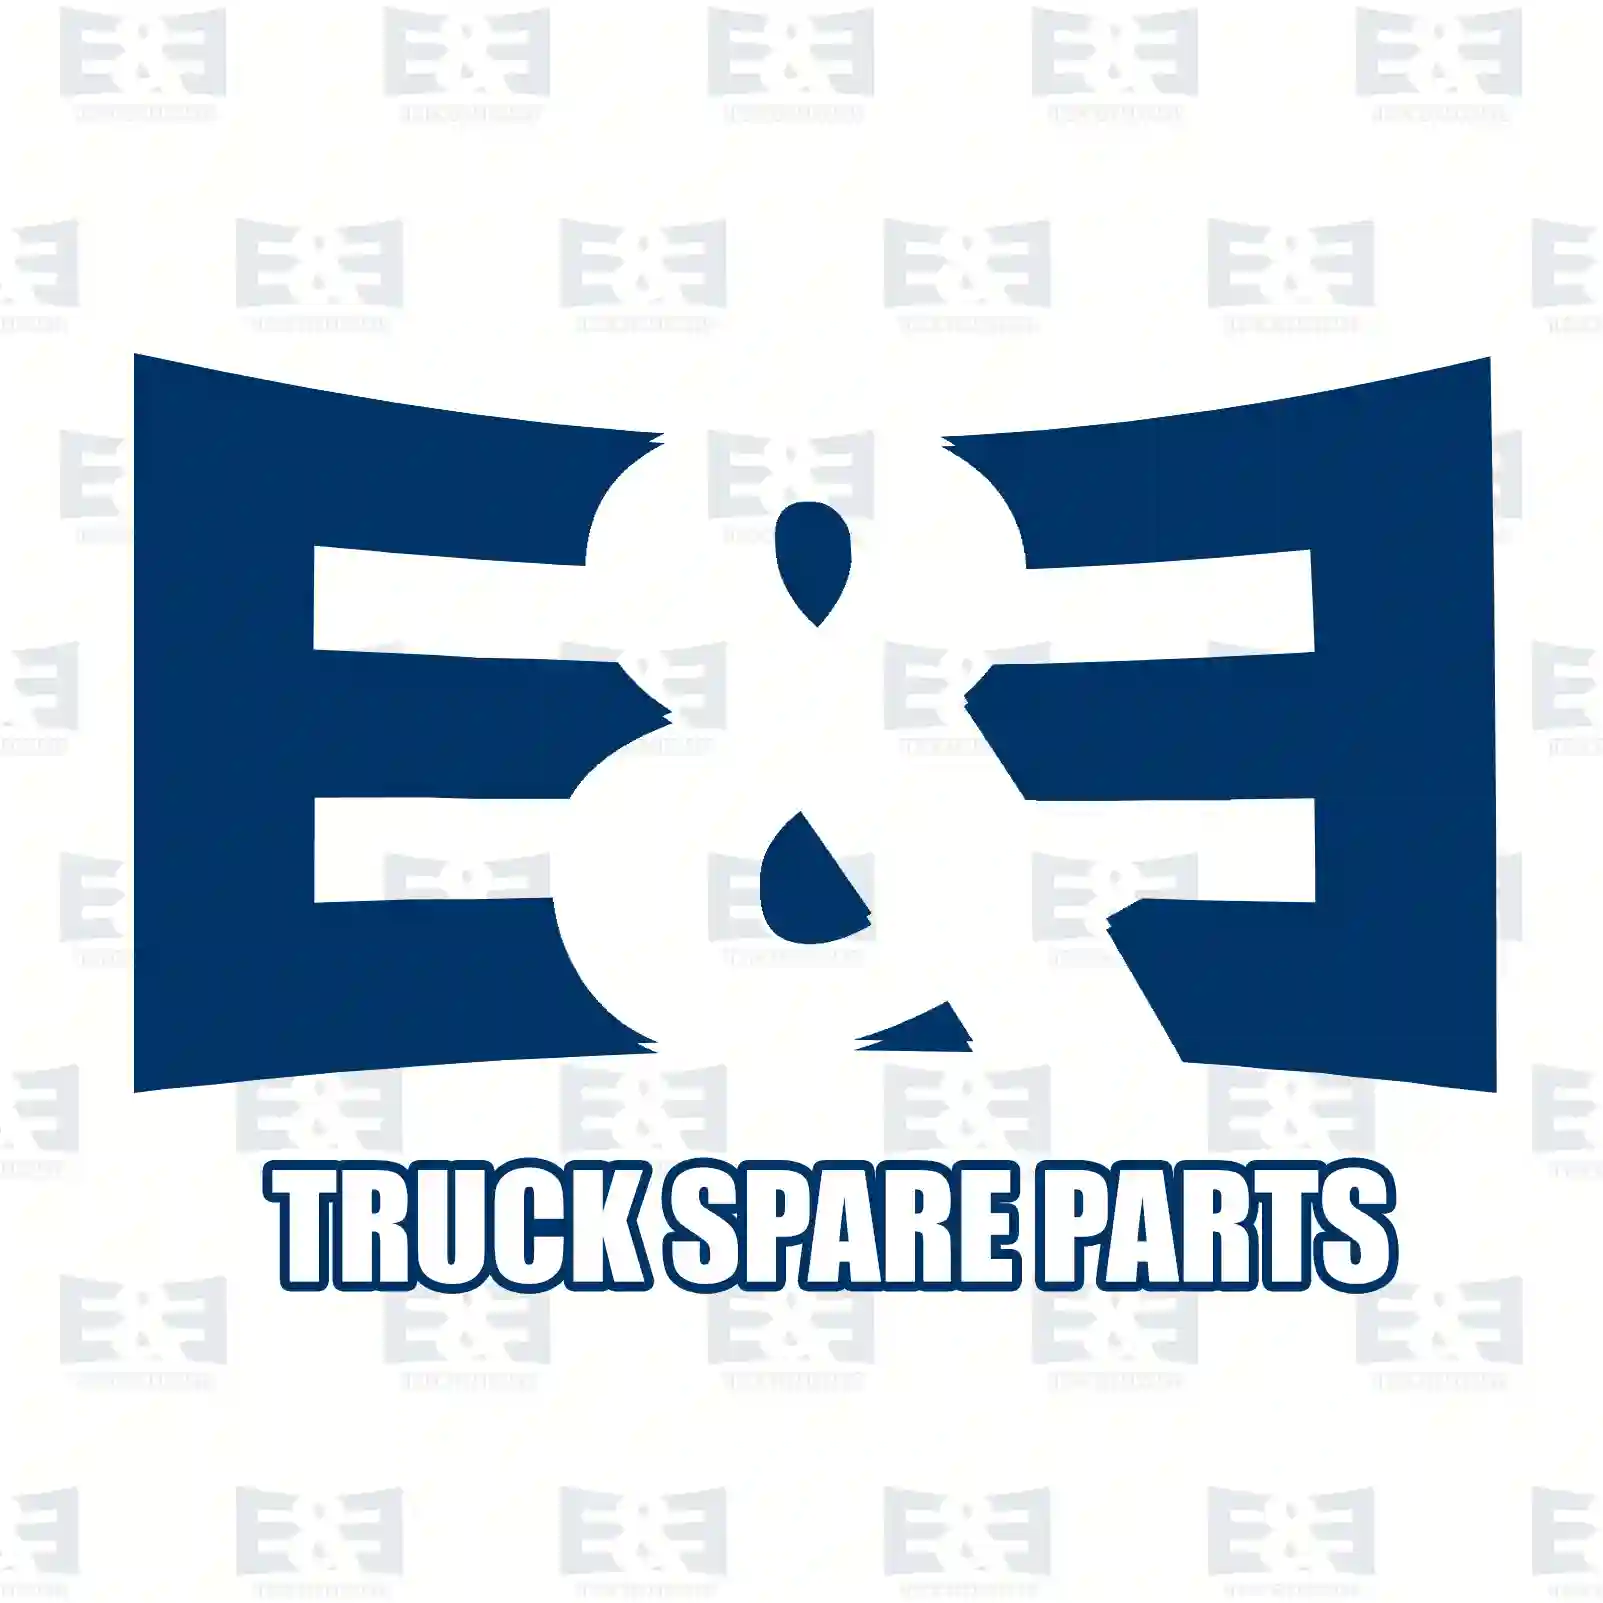 Cabin tilt pump, 2E2275694, 5010224942, , , , , , , ||  2E2275694 E&E Truck Spare Parts | Truck Spare Parts, Auotomotive Spare Parts Cabin tilt pump, 2E2275694, 5010224942, , , , , , , ||  2E2275694 E&E Truck Spare Parts | Truck Spare Parts, Auotomotive Spare Parts